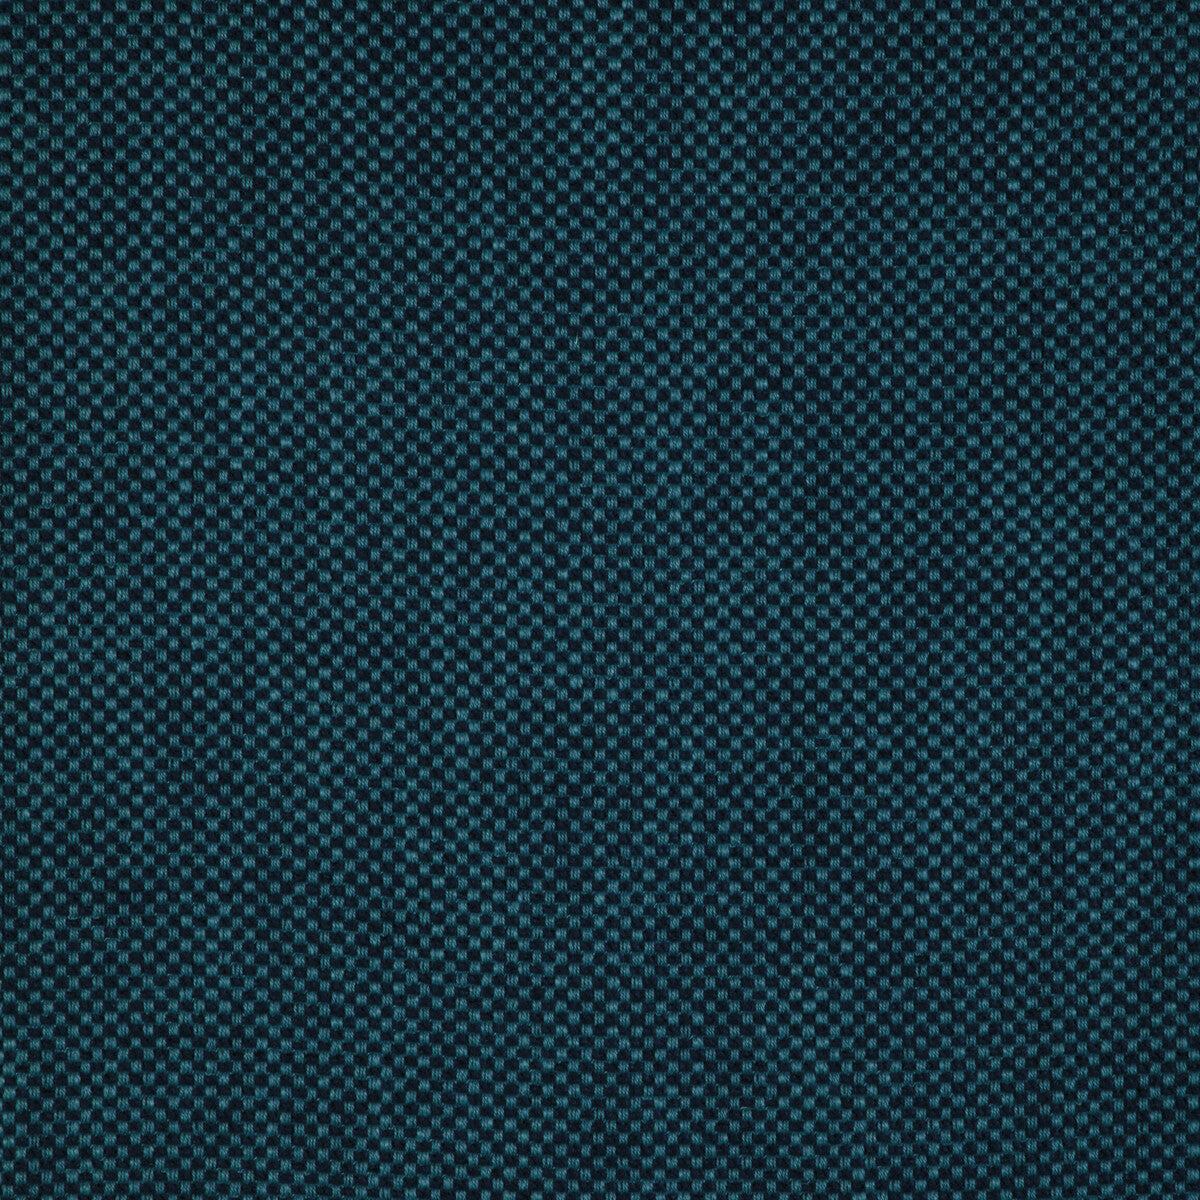 Kravet Smart fabric in 36999-5 color - pattern 36999.5.0 - by Kravet Smart in the Pavilion collection